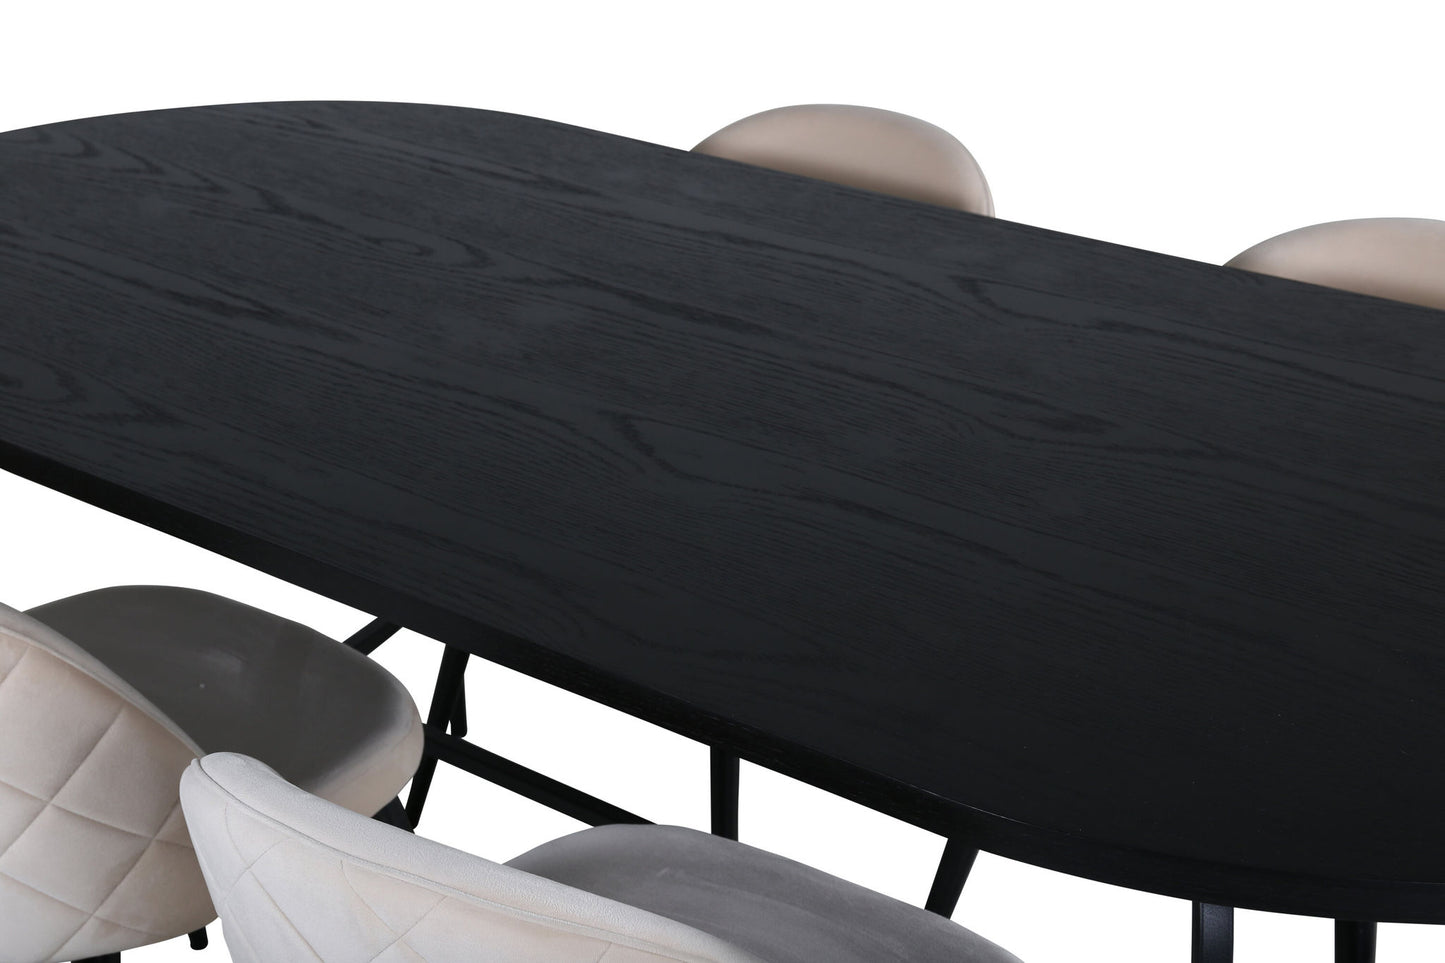 Skate - Ovalt spisebord, Sort finér+ velour syninger Stol - Sort / Beige velour